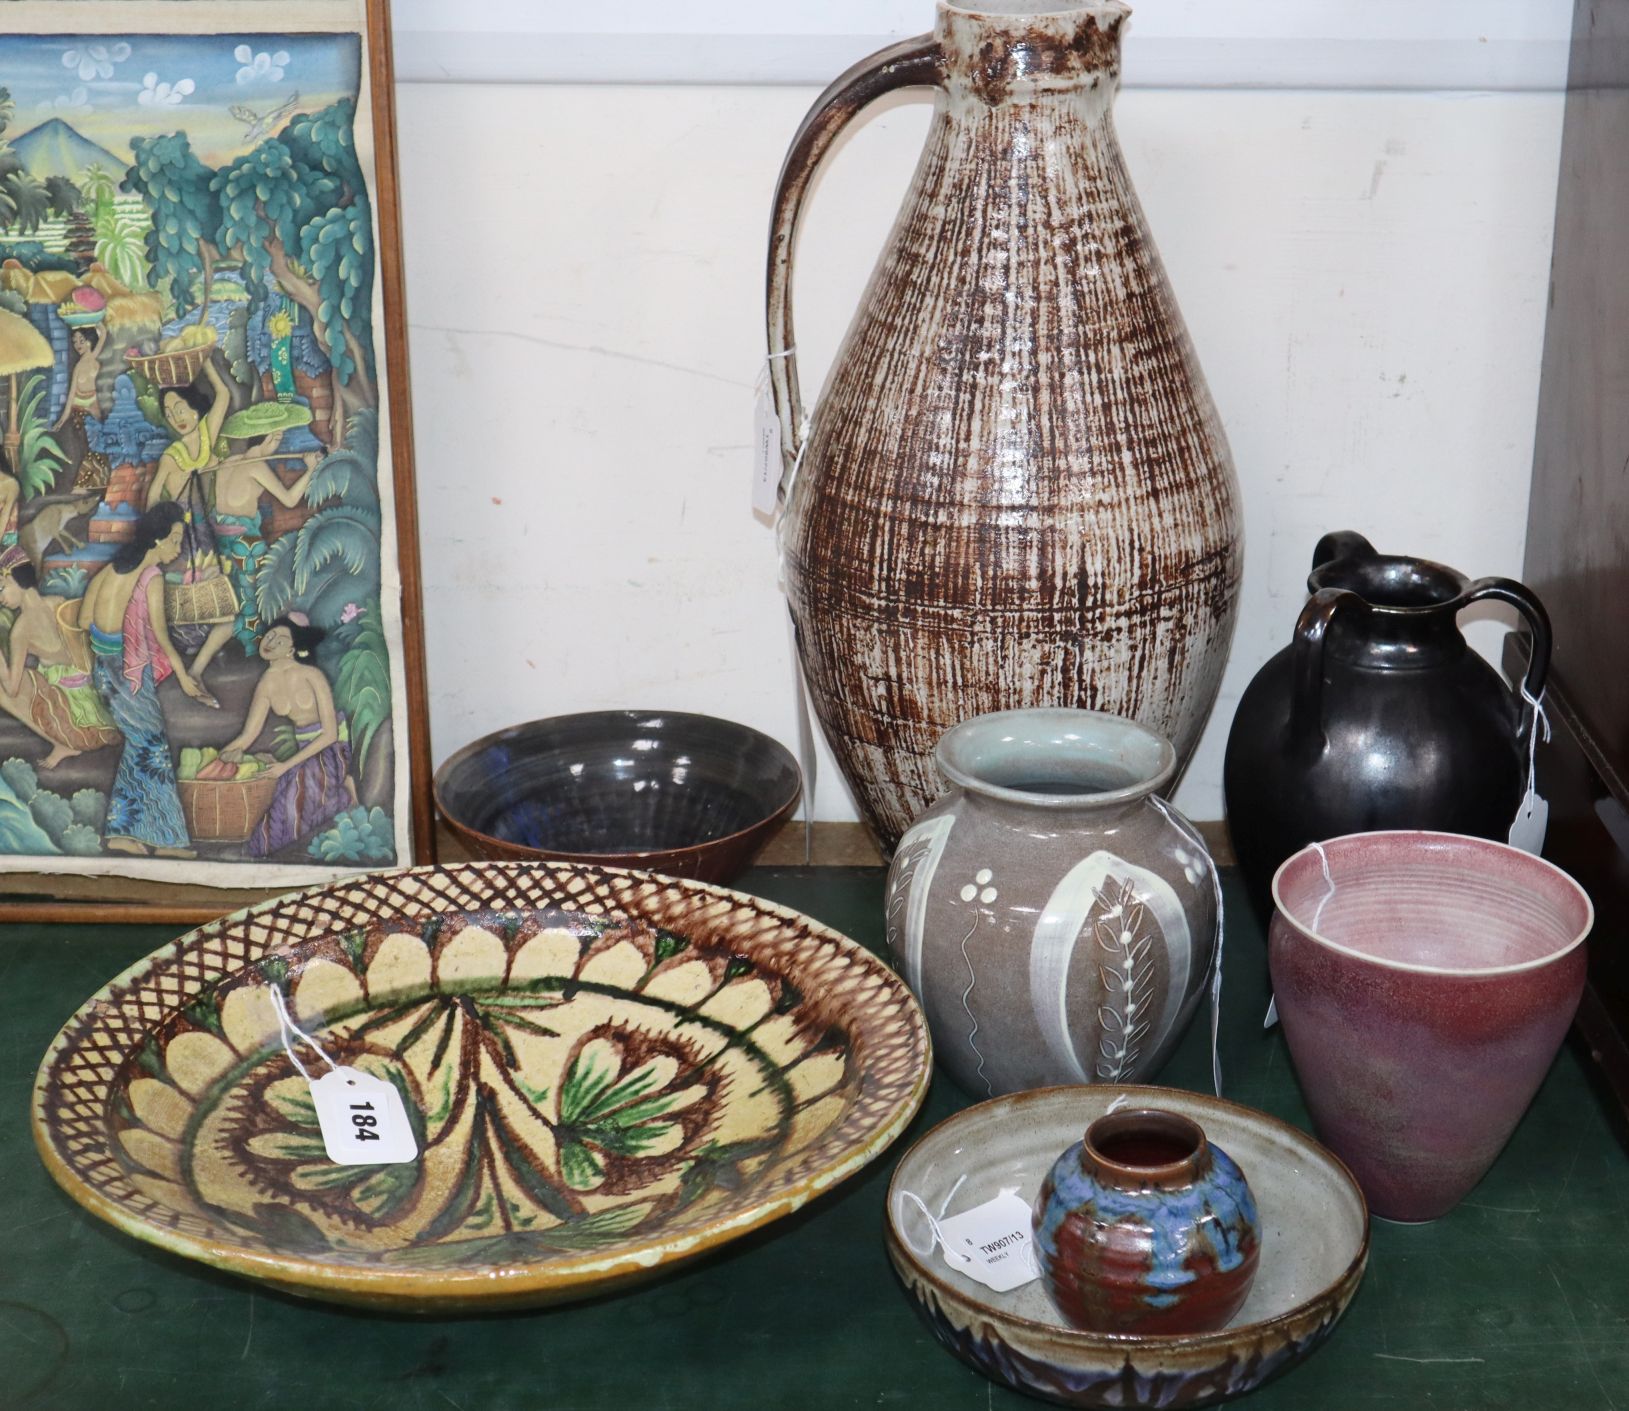 Barbara Cass (1921-1992), a large stoneware pitcher and sundry studio ceramics, including a